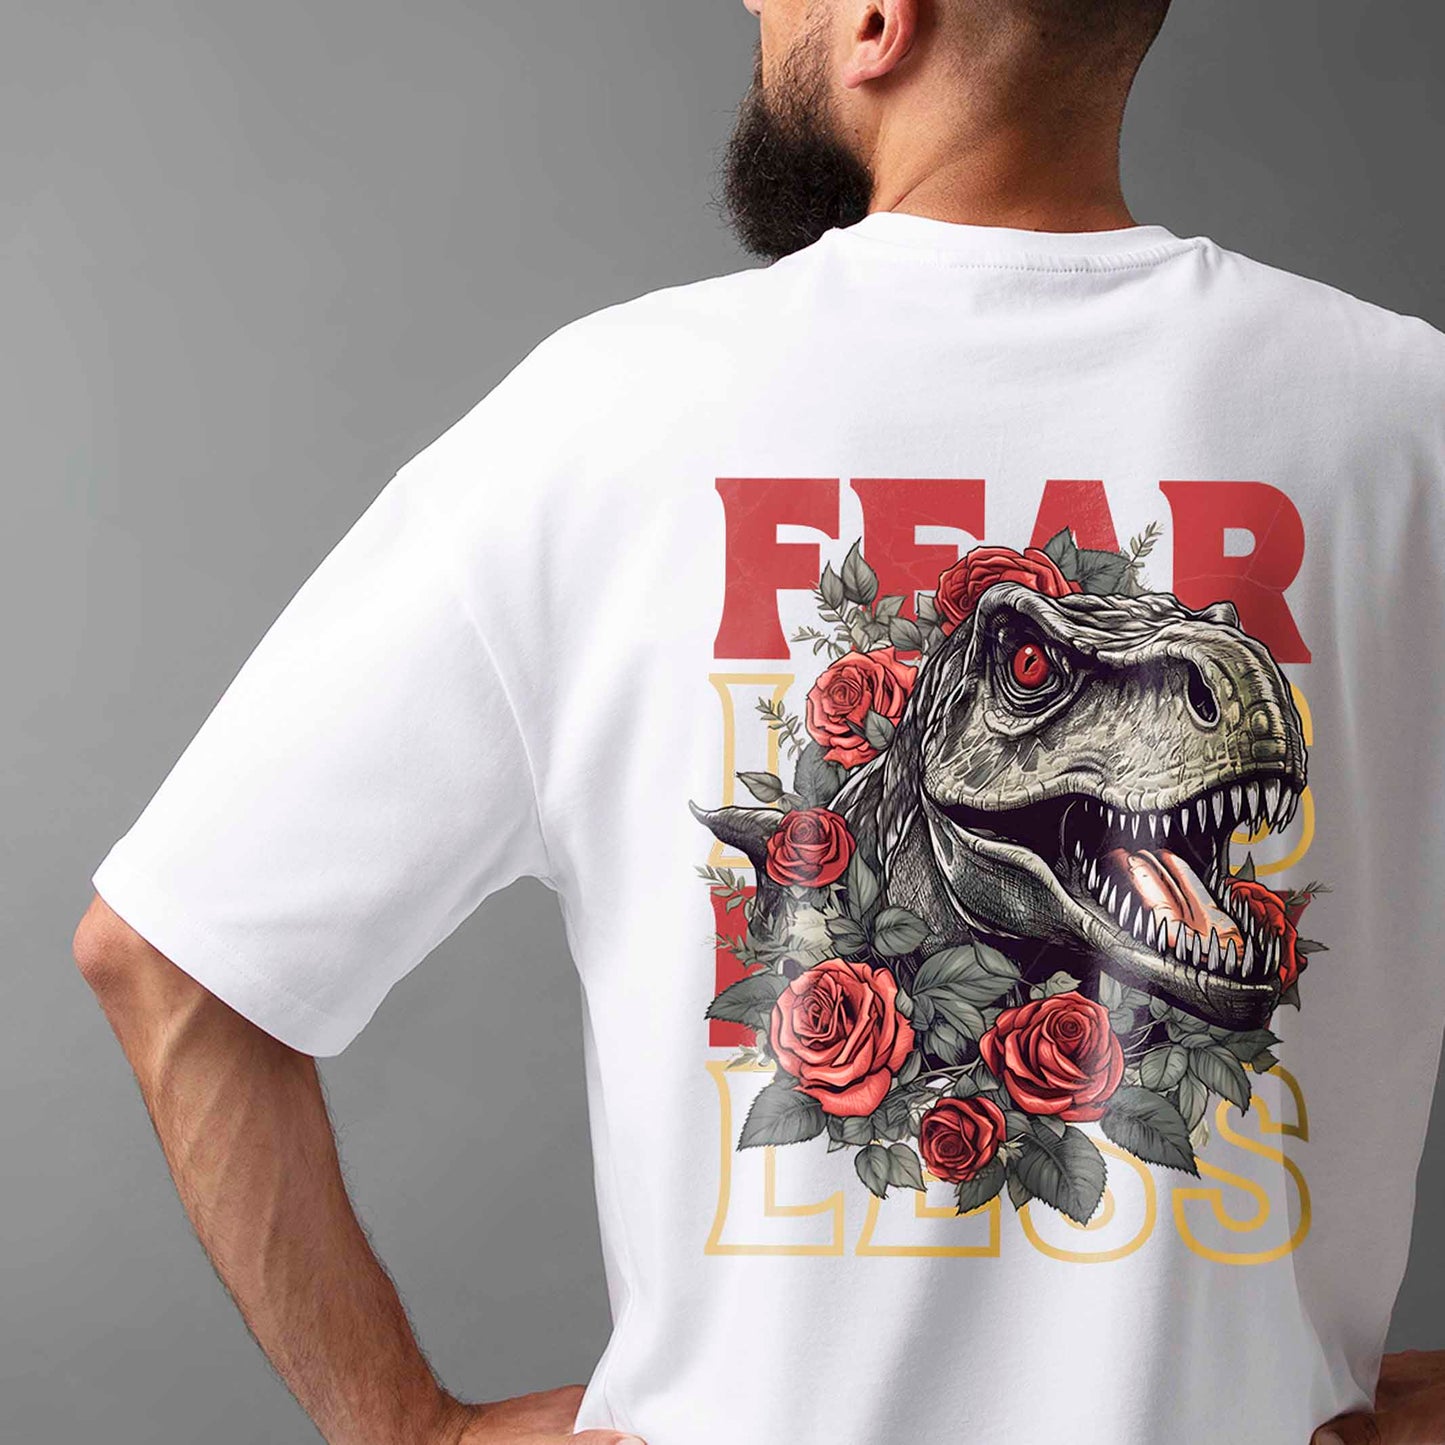 Beyond Jurassic: Oversized T-shirt